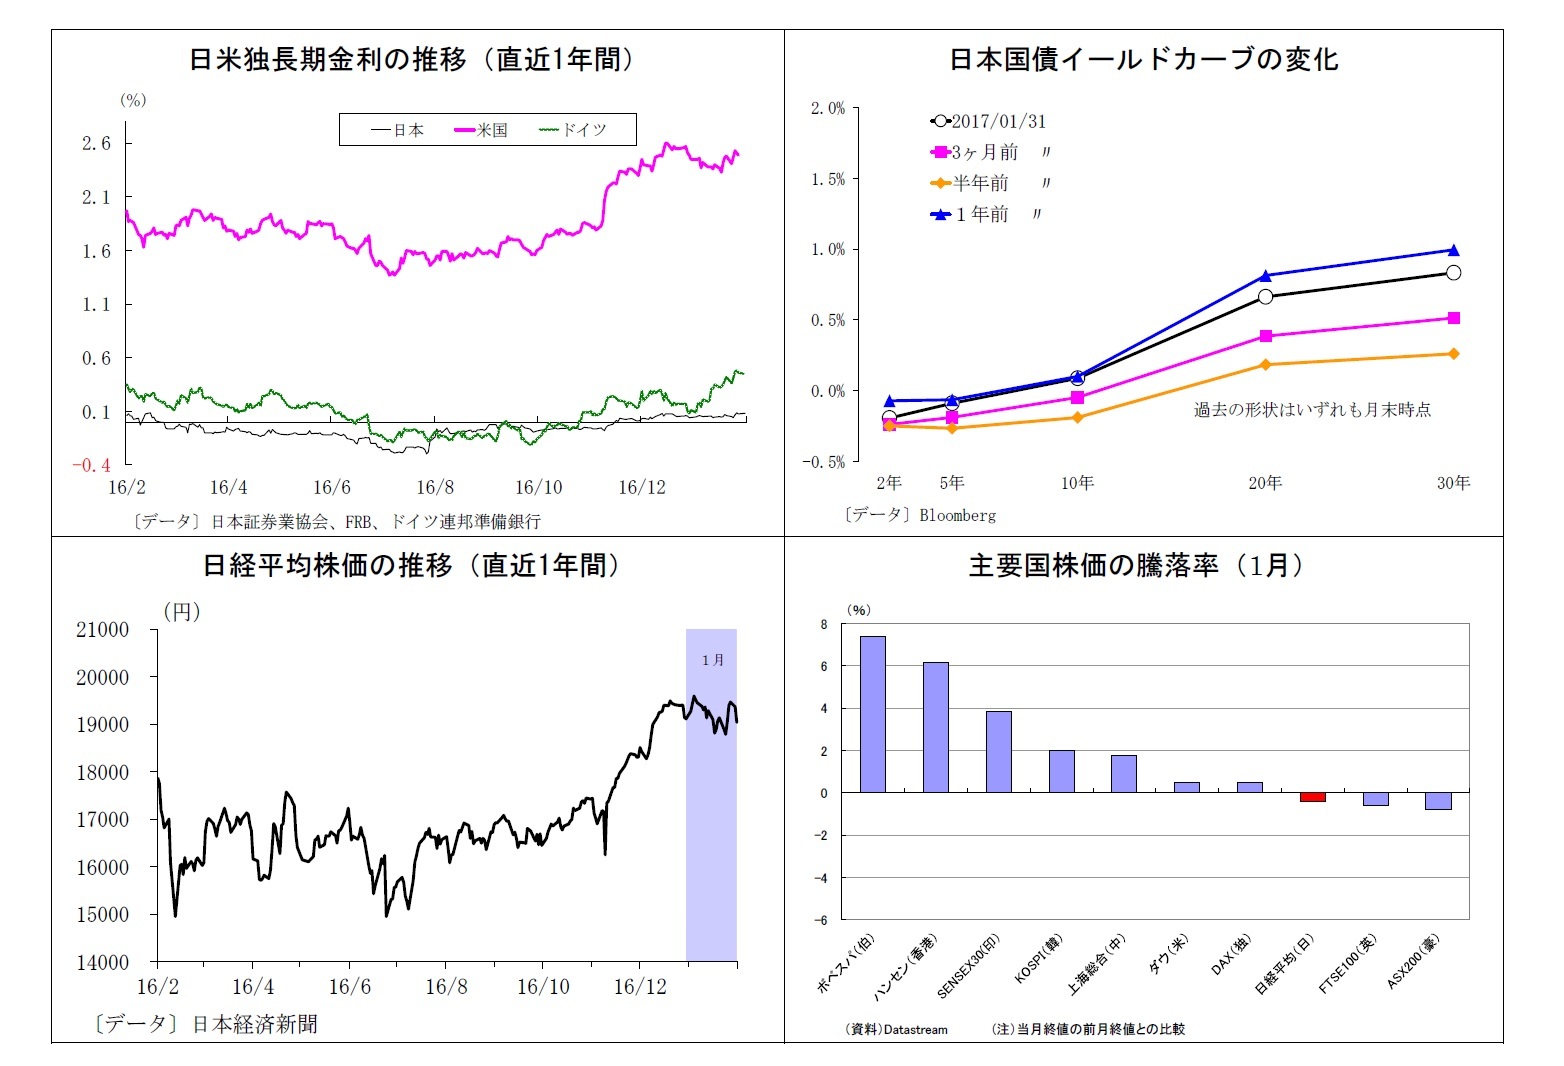 日米独長期金利の推移（直近1年間）/日本国債イールドカーブの変化/日経平均株価の推移（直近1年間）/主要国株価の騰落率（1月）